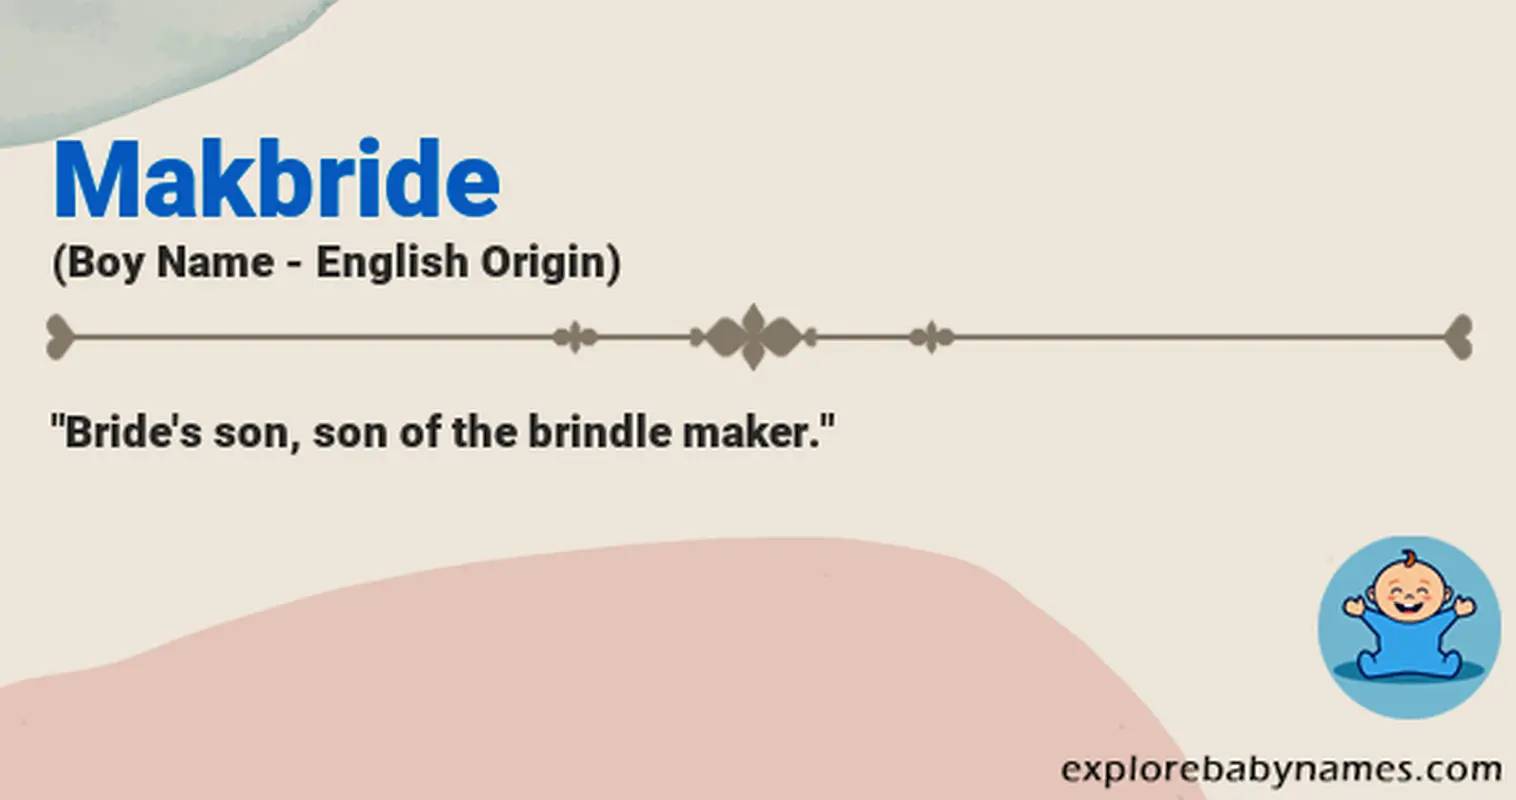 Meaning of Makbride